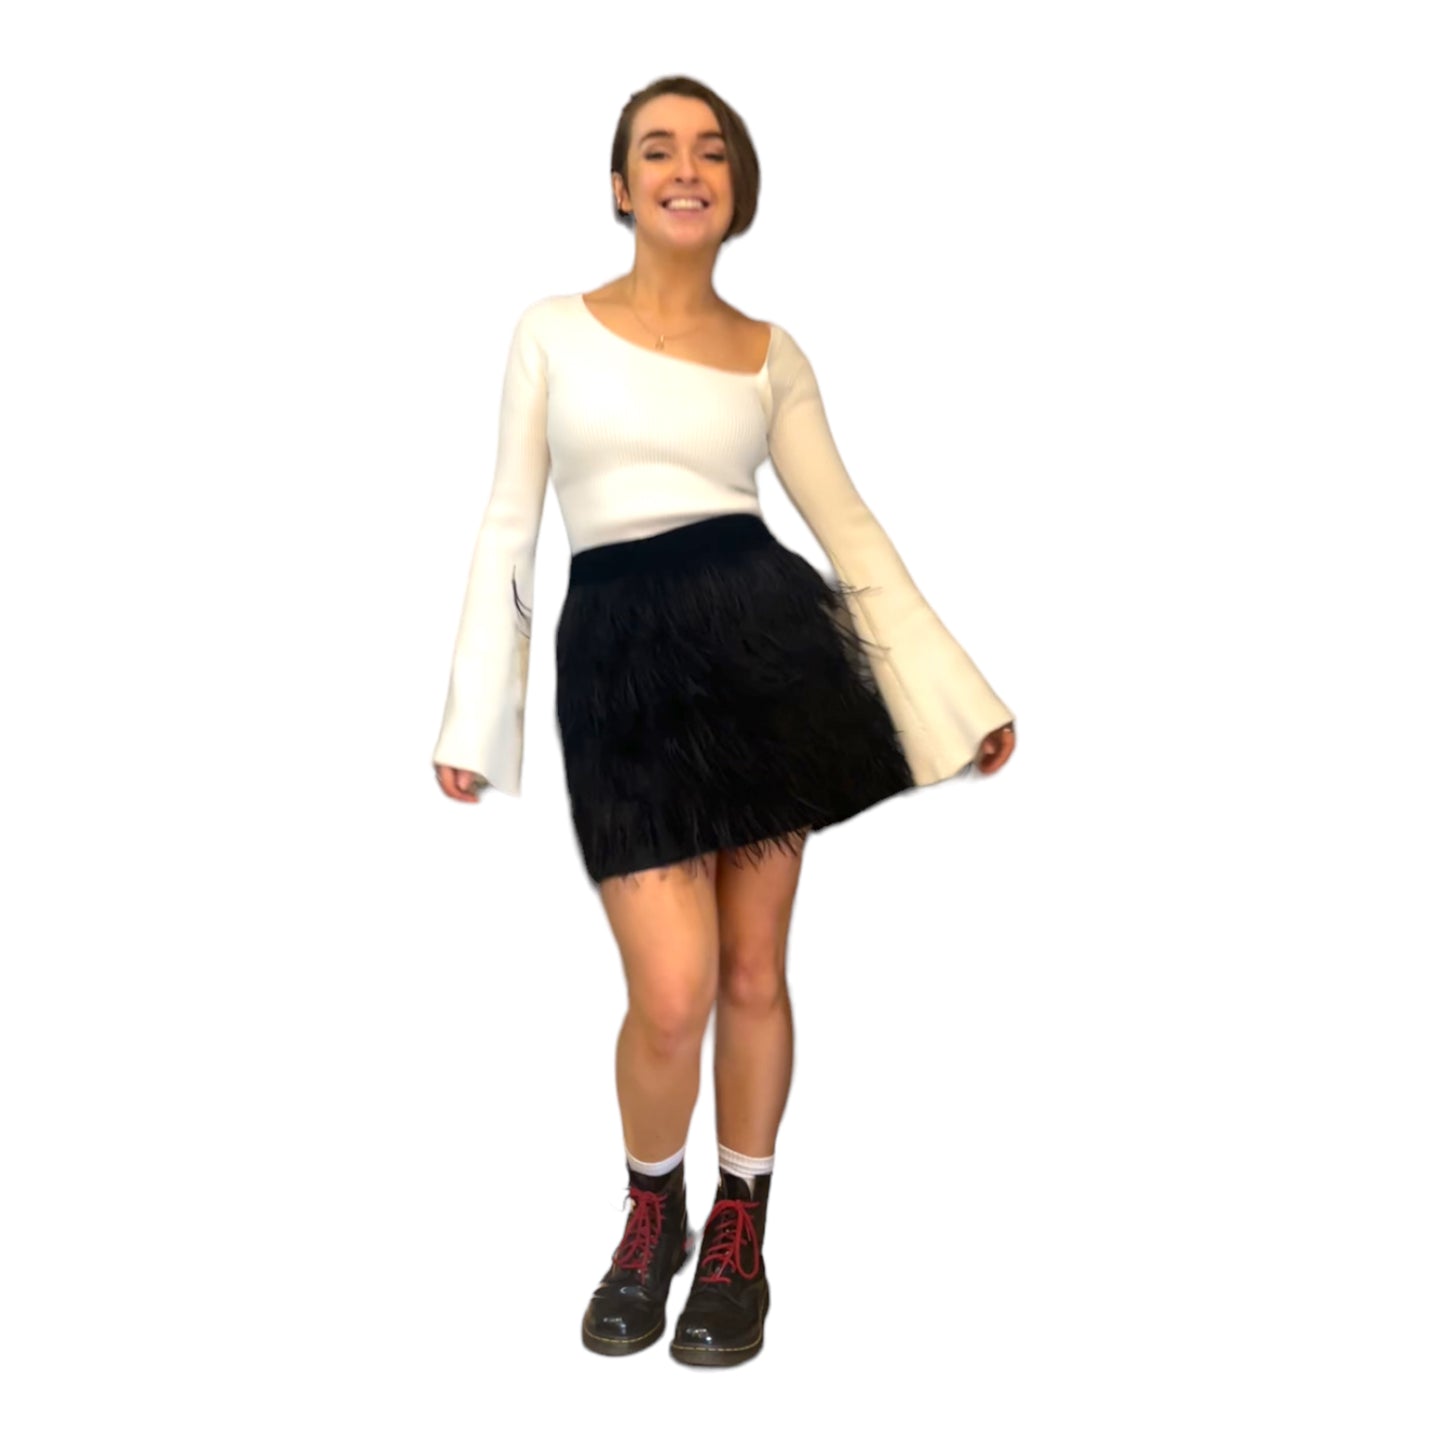 Sam Edelman Black Feather Skirt